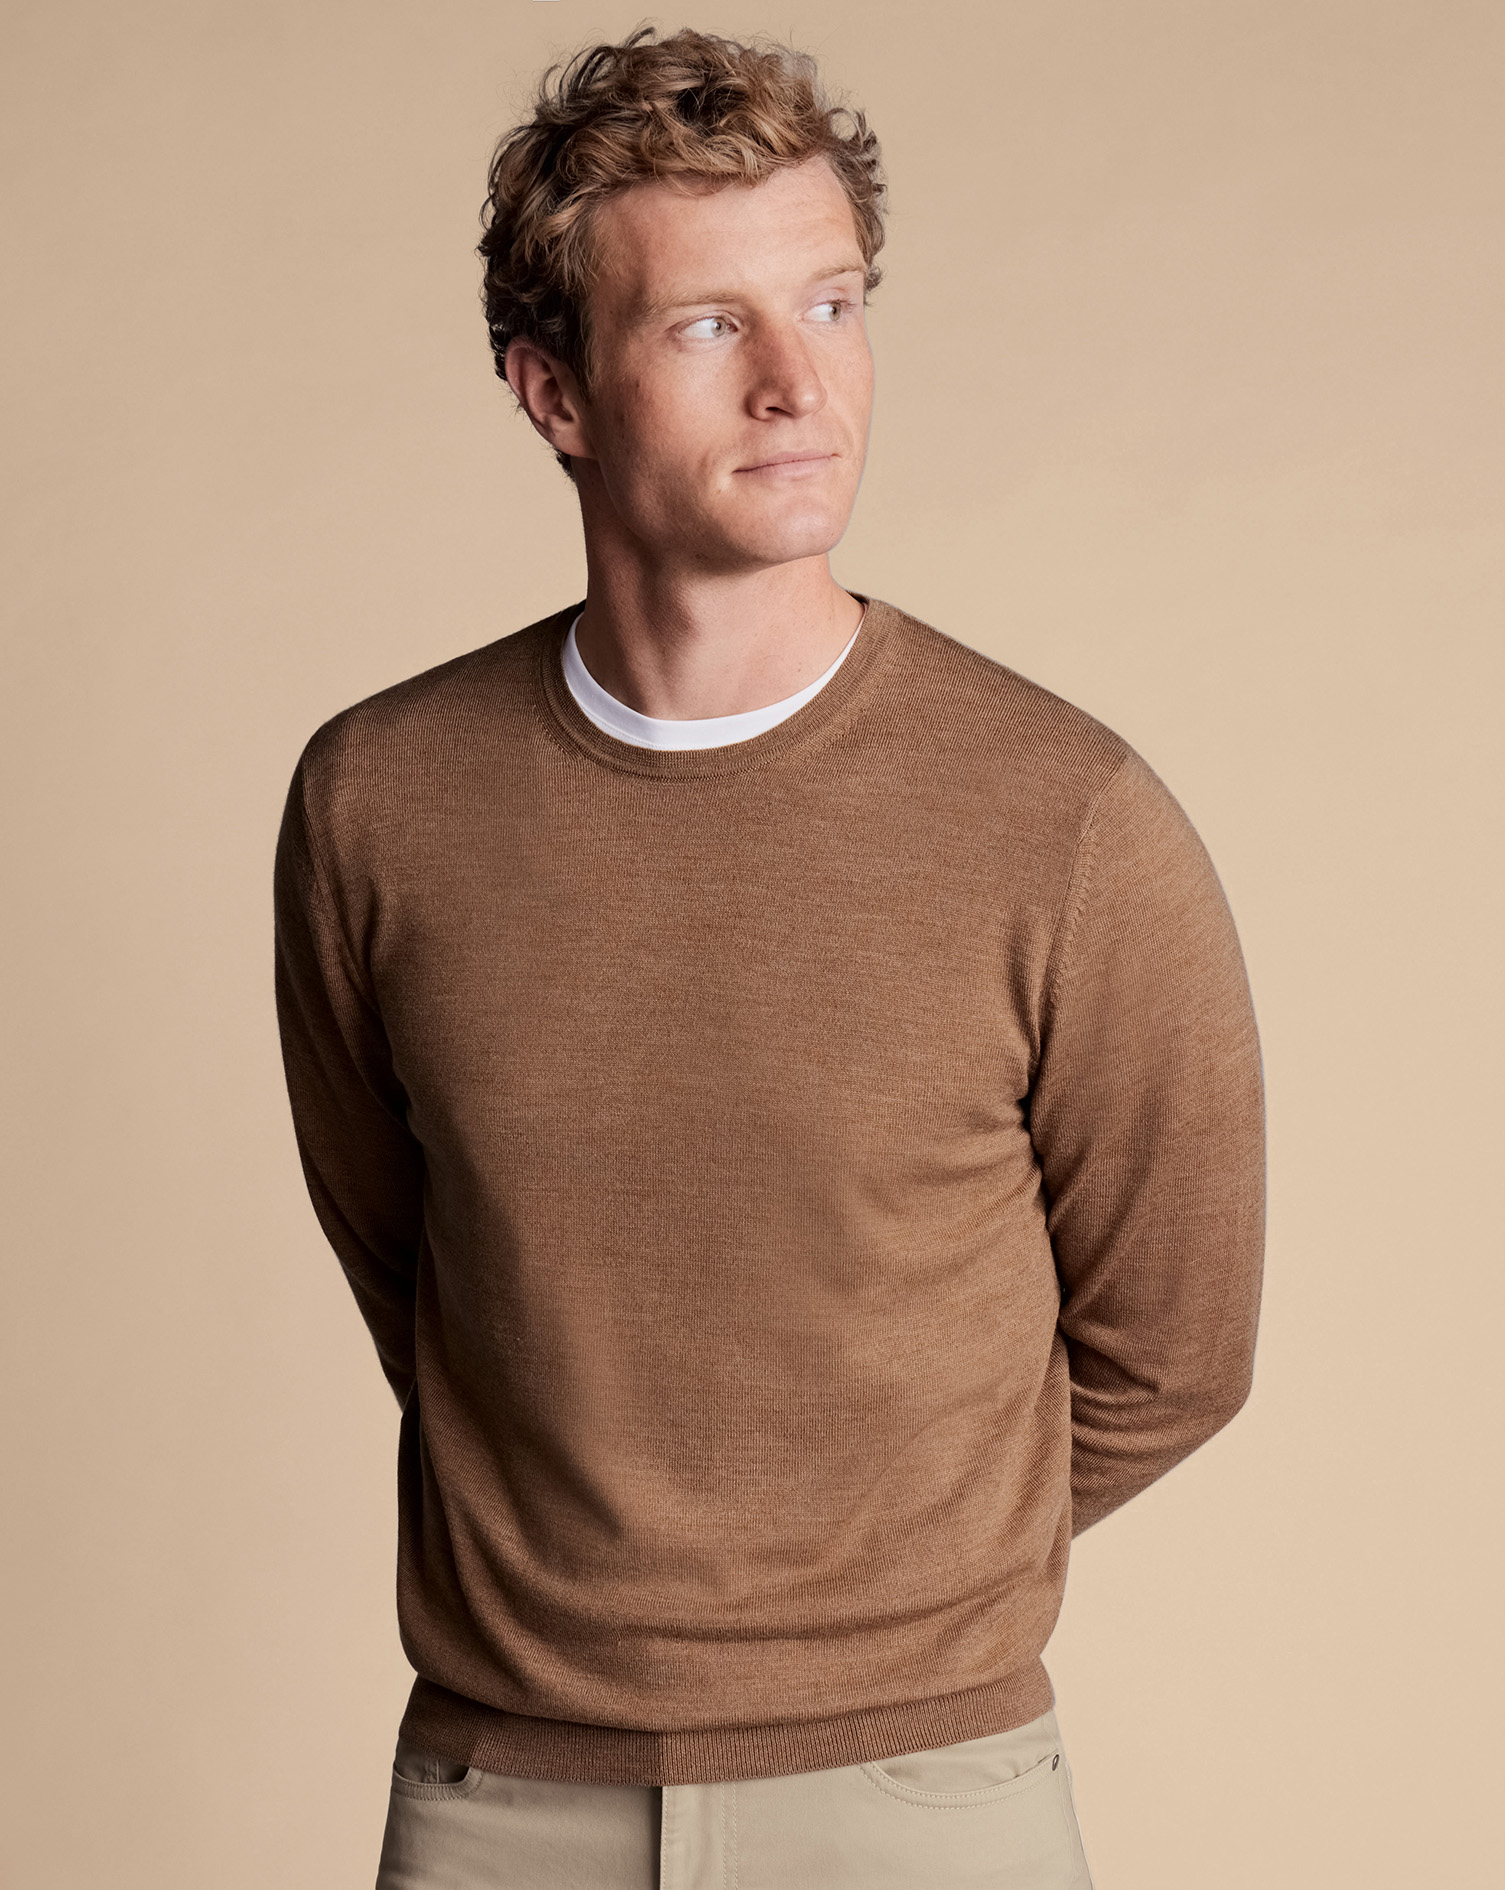 Men's Charles Tyrwhitt Merino Crew Neck Sweater - Sand Brown Neutral Size Large Wool
